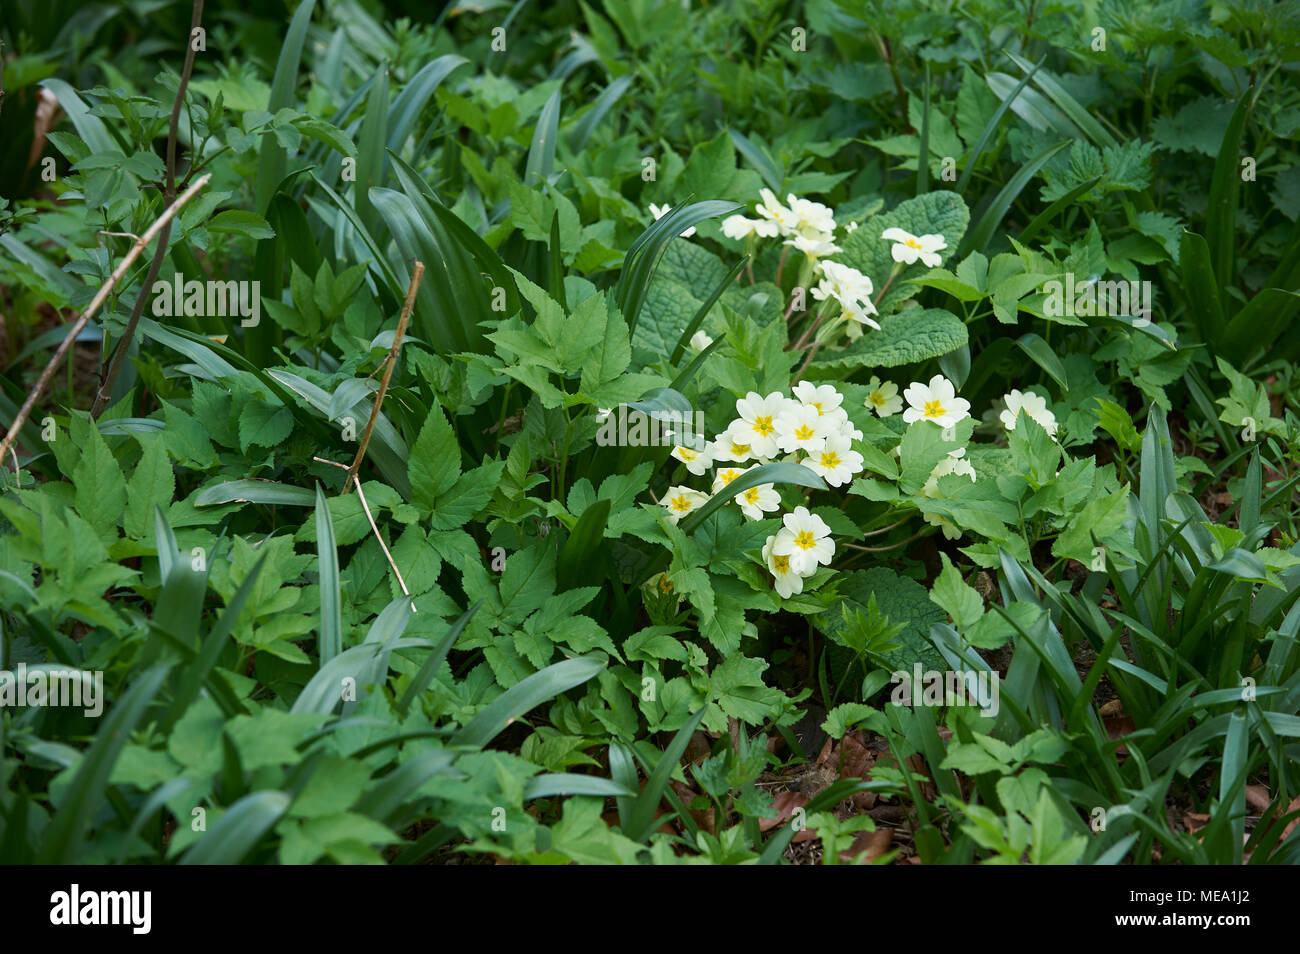 Primrose's (Primula vulgaris) growing in spring plants Stock Photo